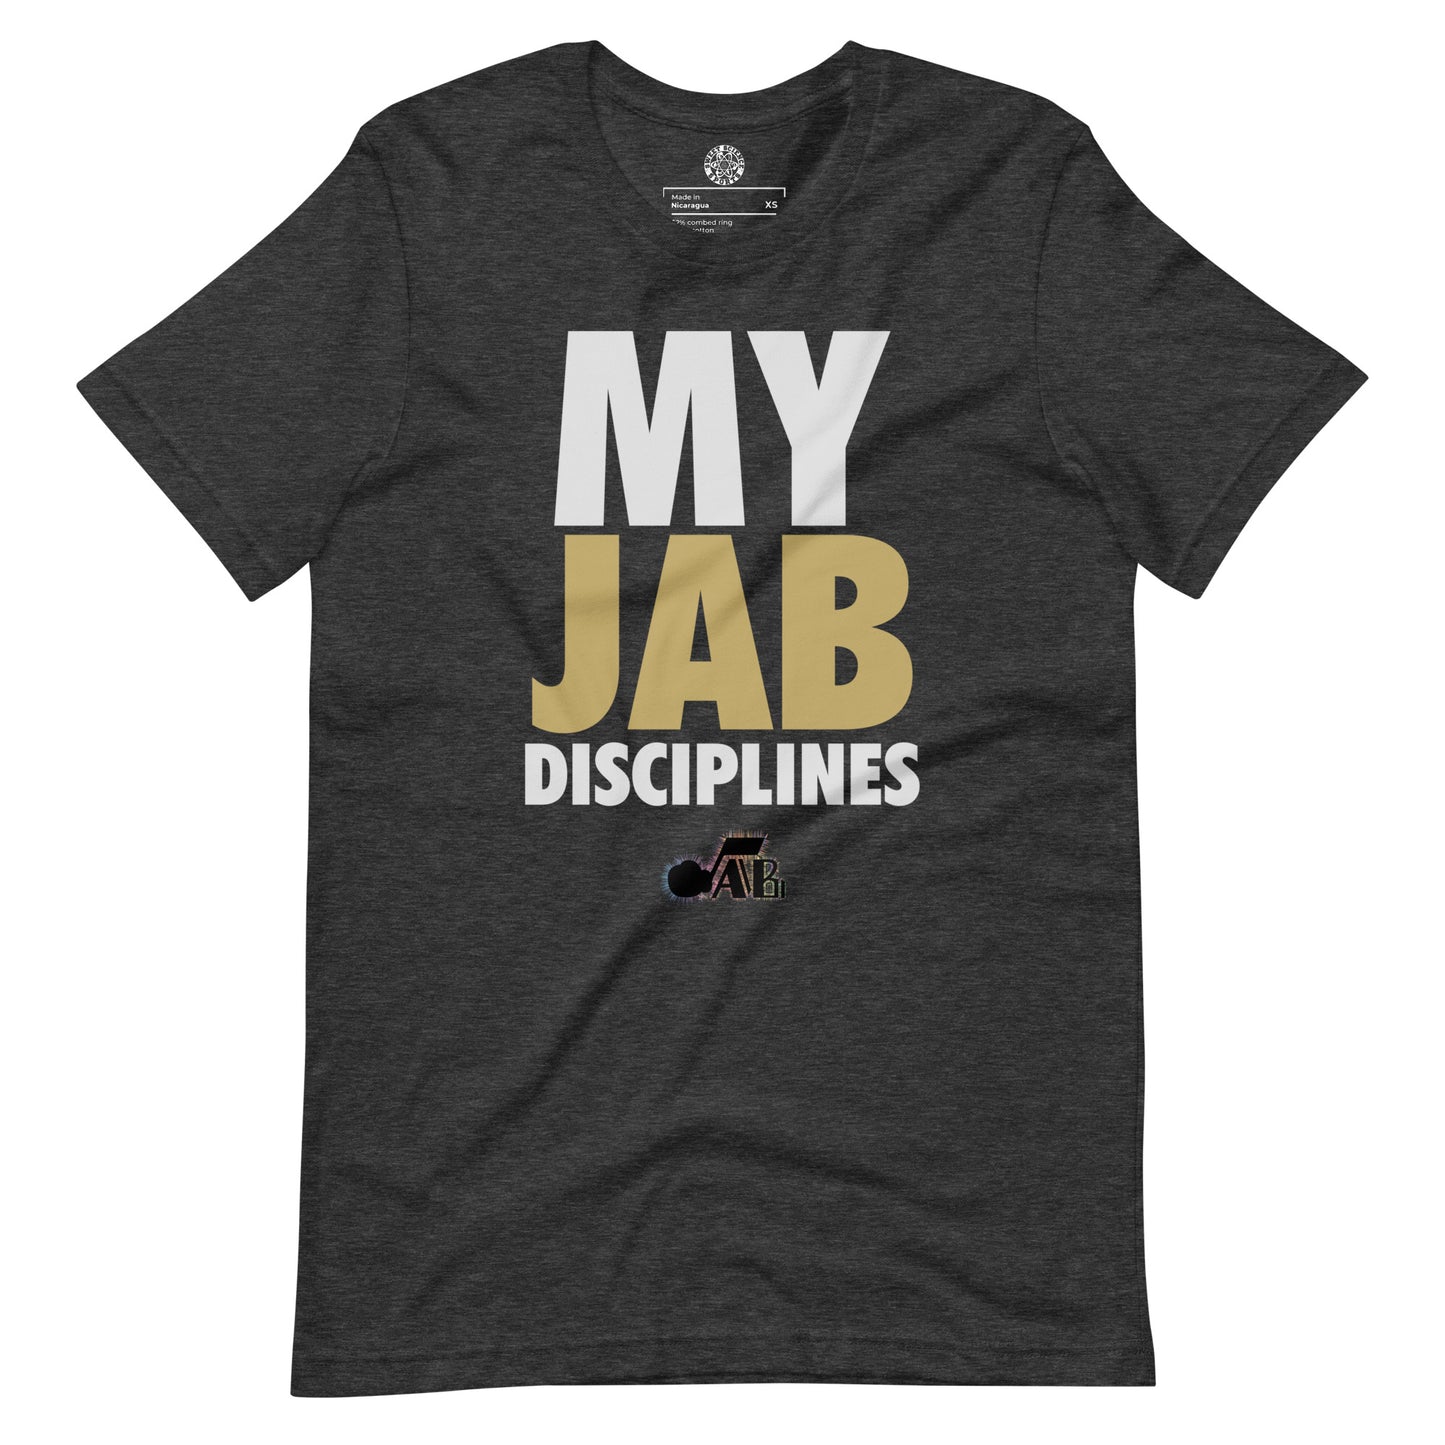 My Jab Disciplines  t-shirt